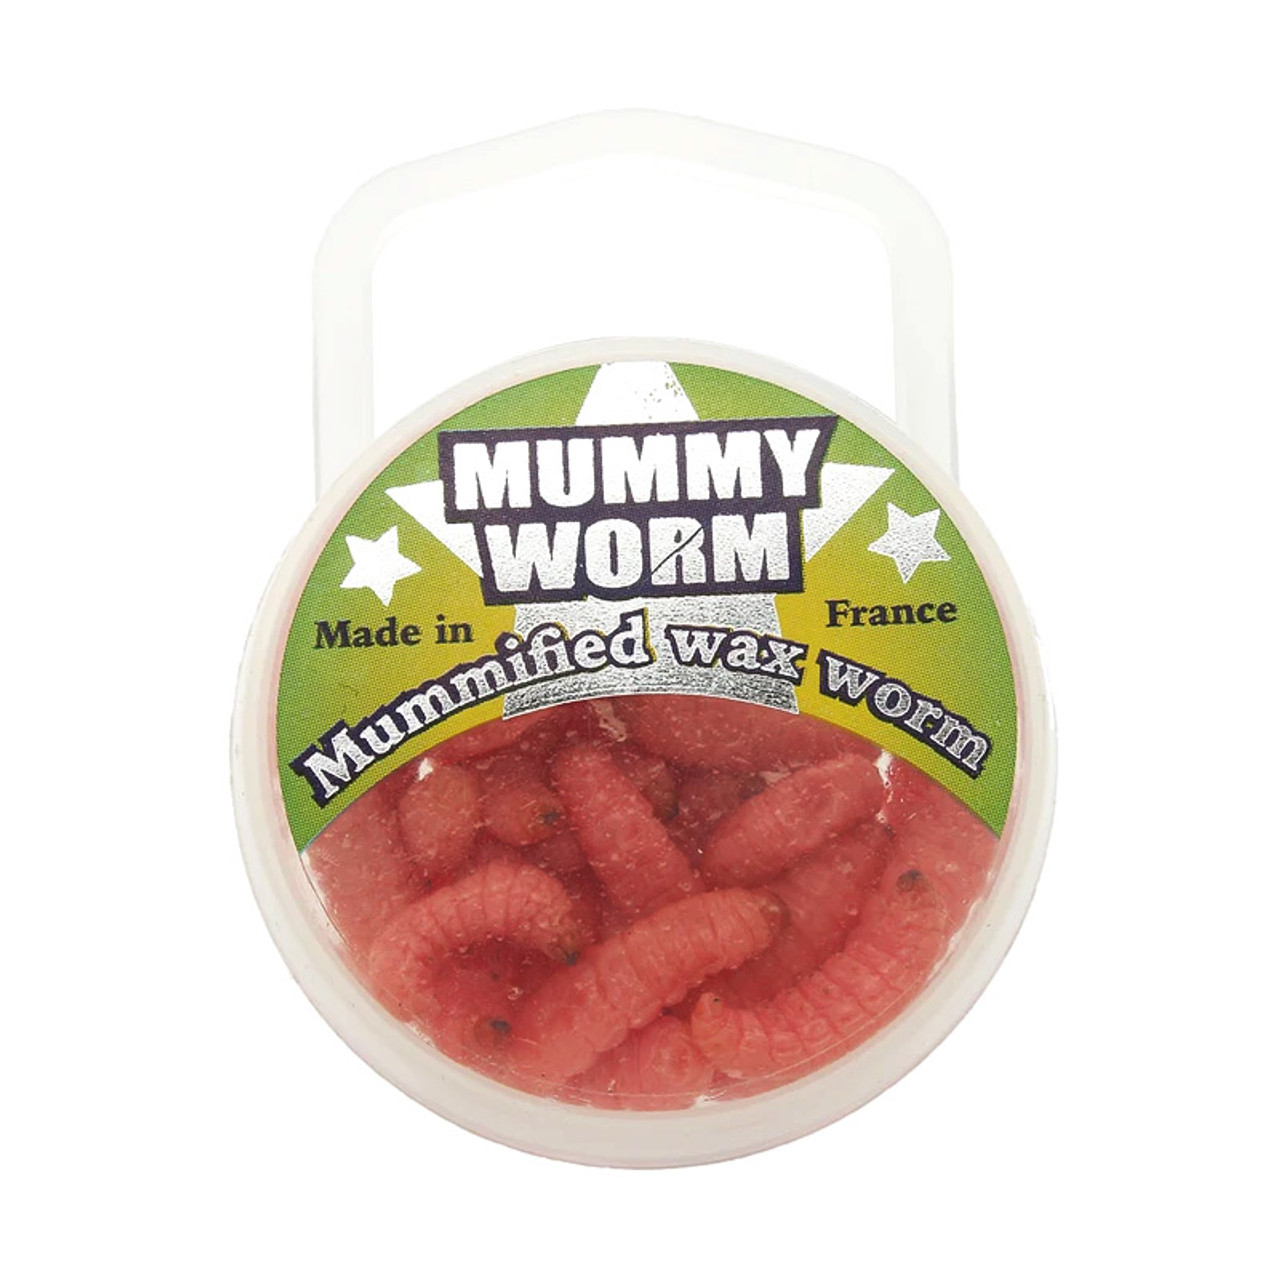 Mummy Worm Mummified Wax Worms by Eurotackle